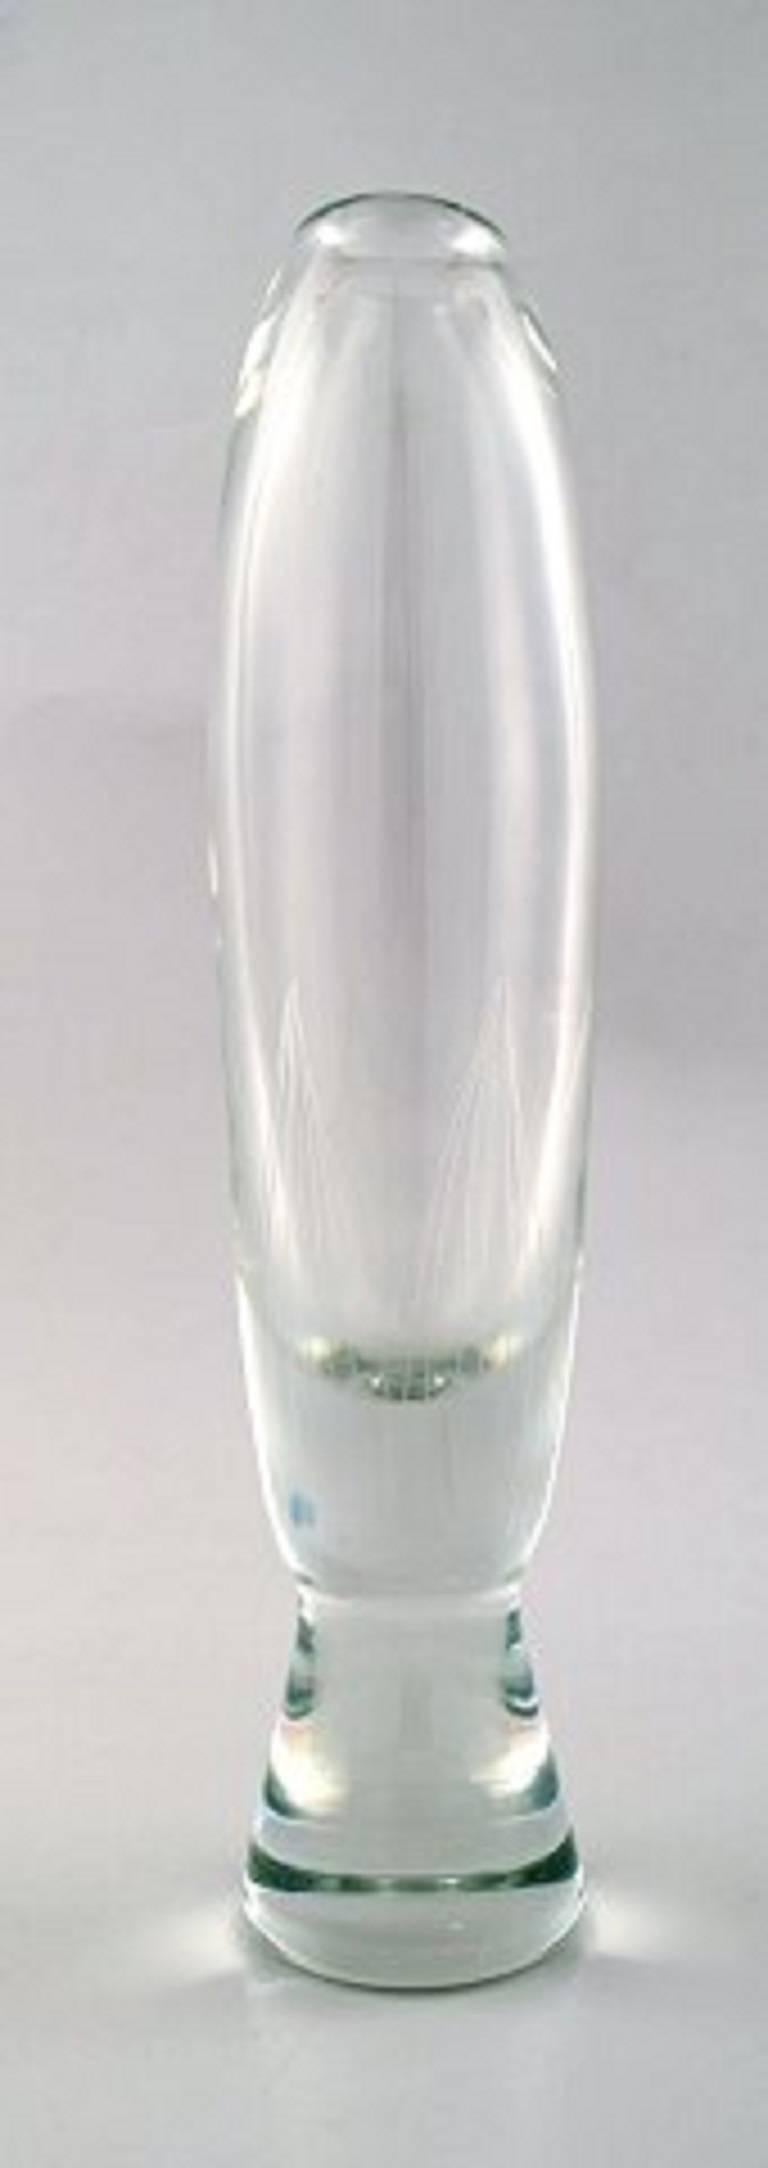 Scandinavian Modern Pair of Large Orrefors Glass Vases, Stylish Swedish Design, 1950s-1960s For Sale